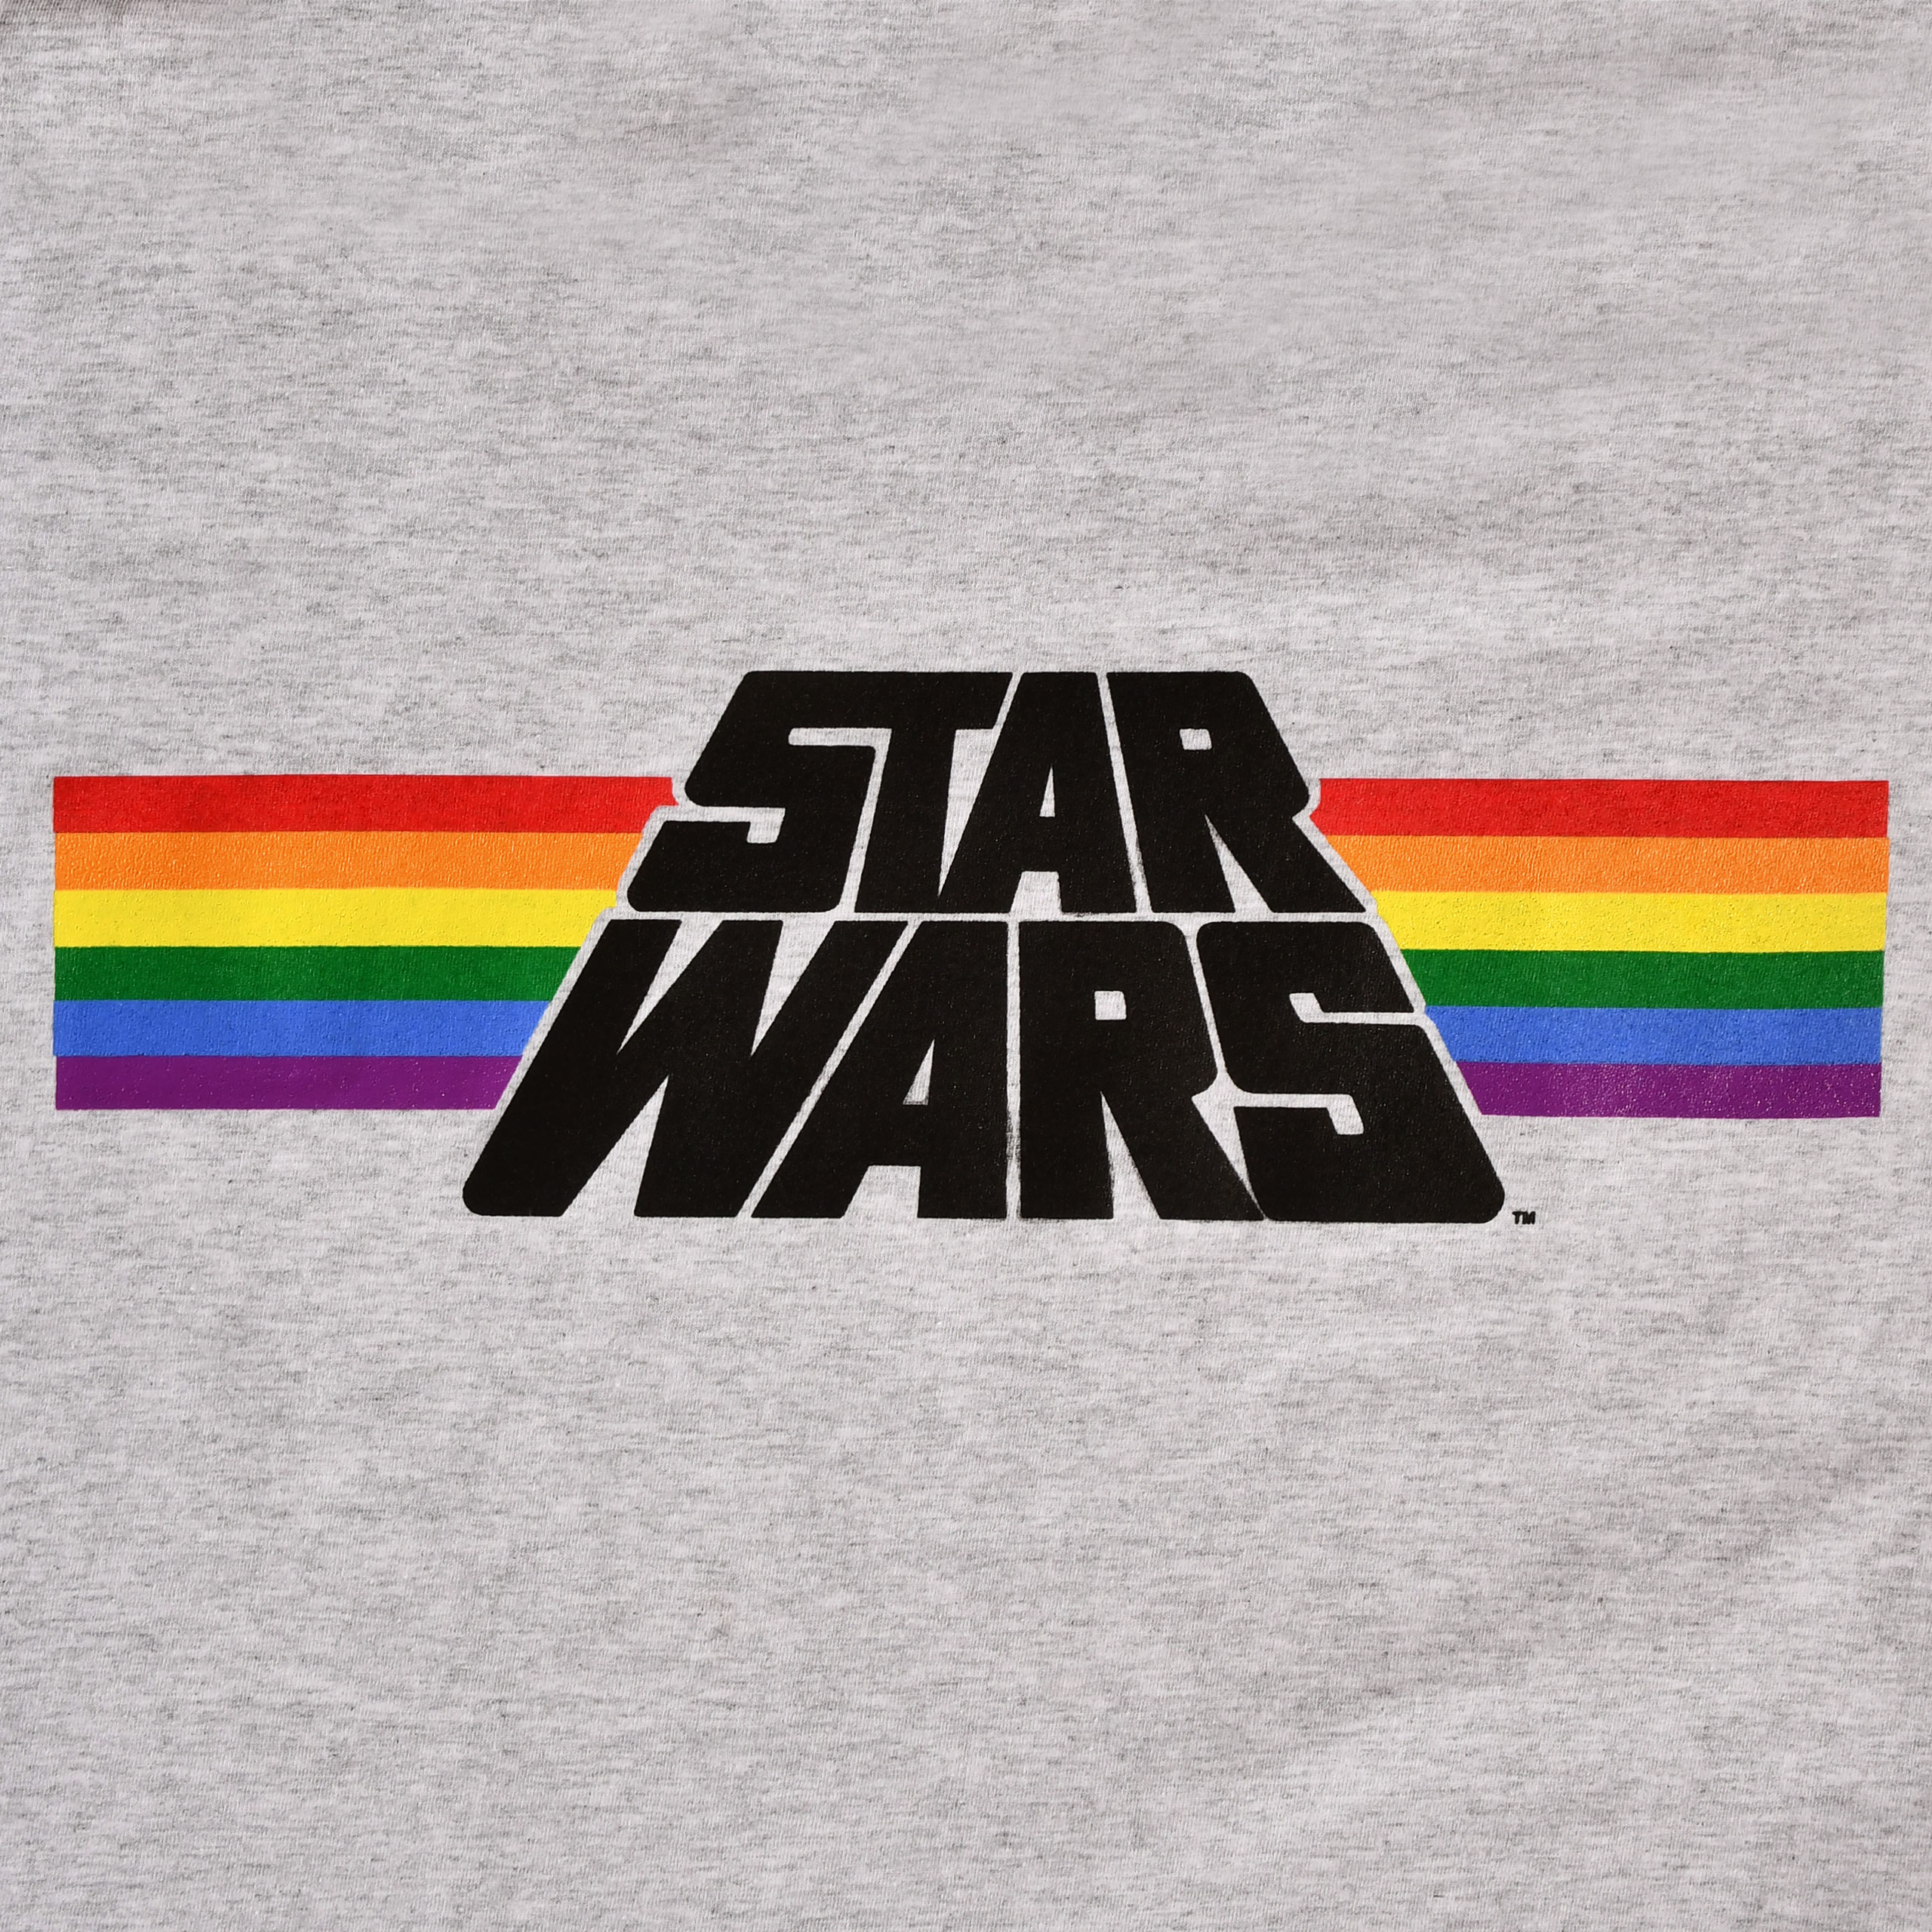 Star Wars - T-shirt Pride Logo Classique Arc-en-ciel gris